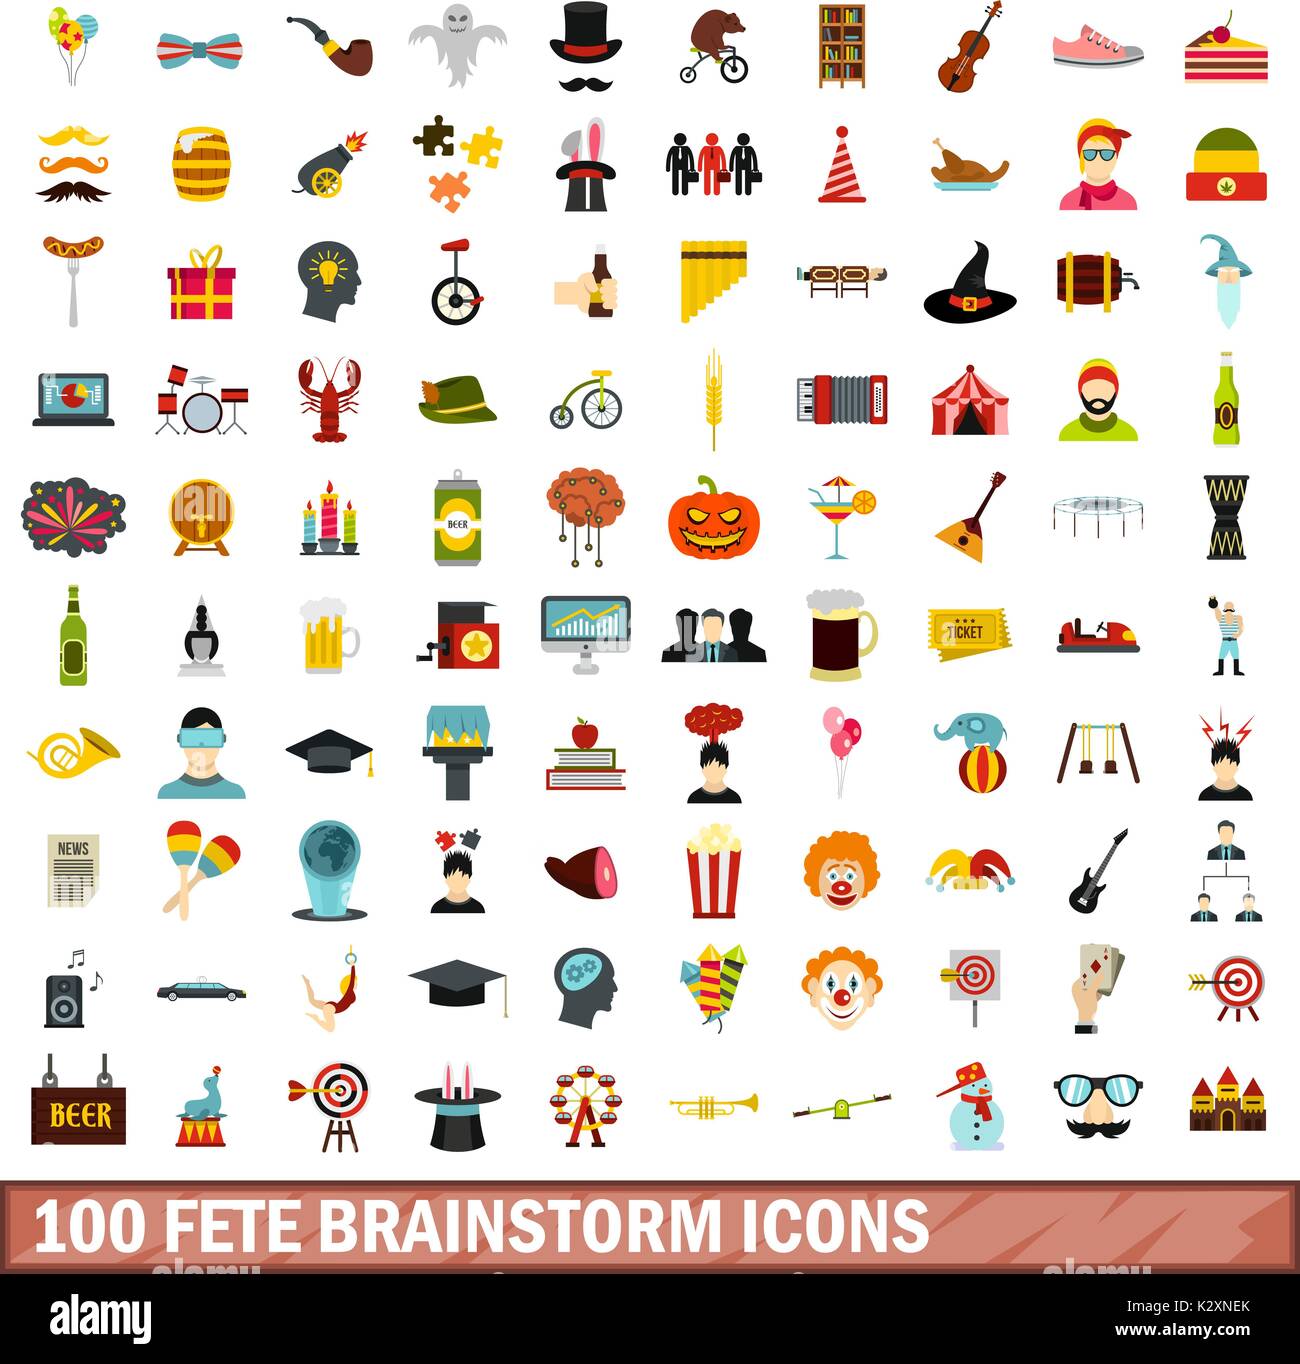 100 fete brainstorm icons set, flat style Stock Vector